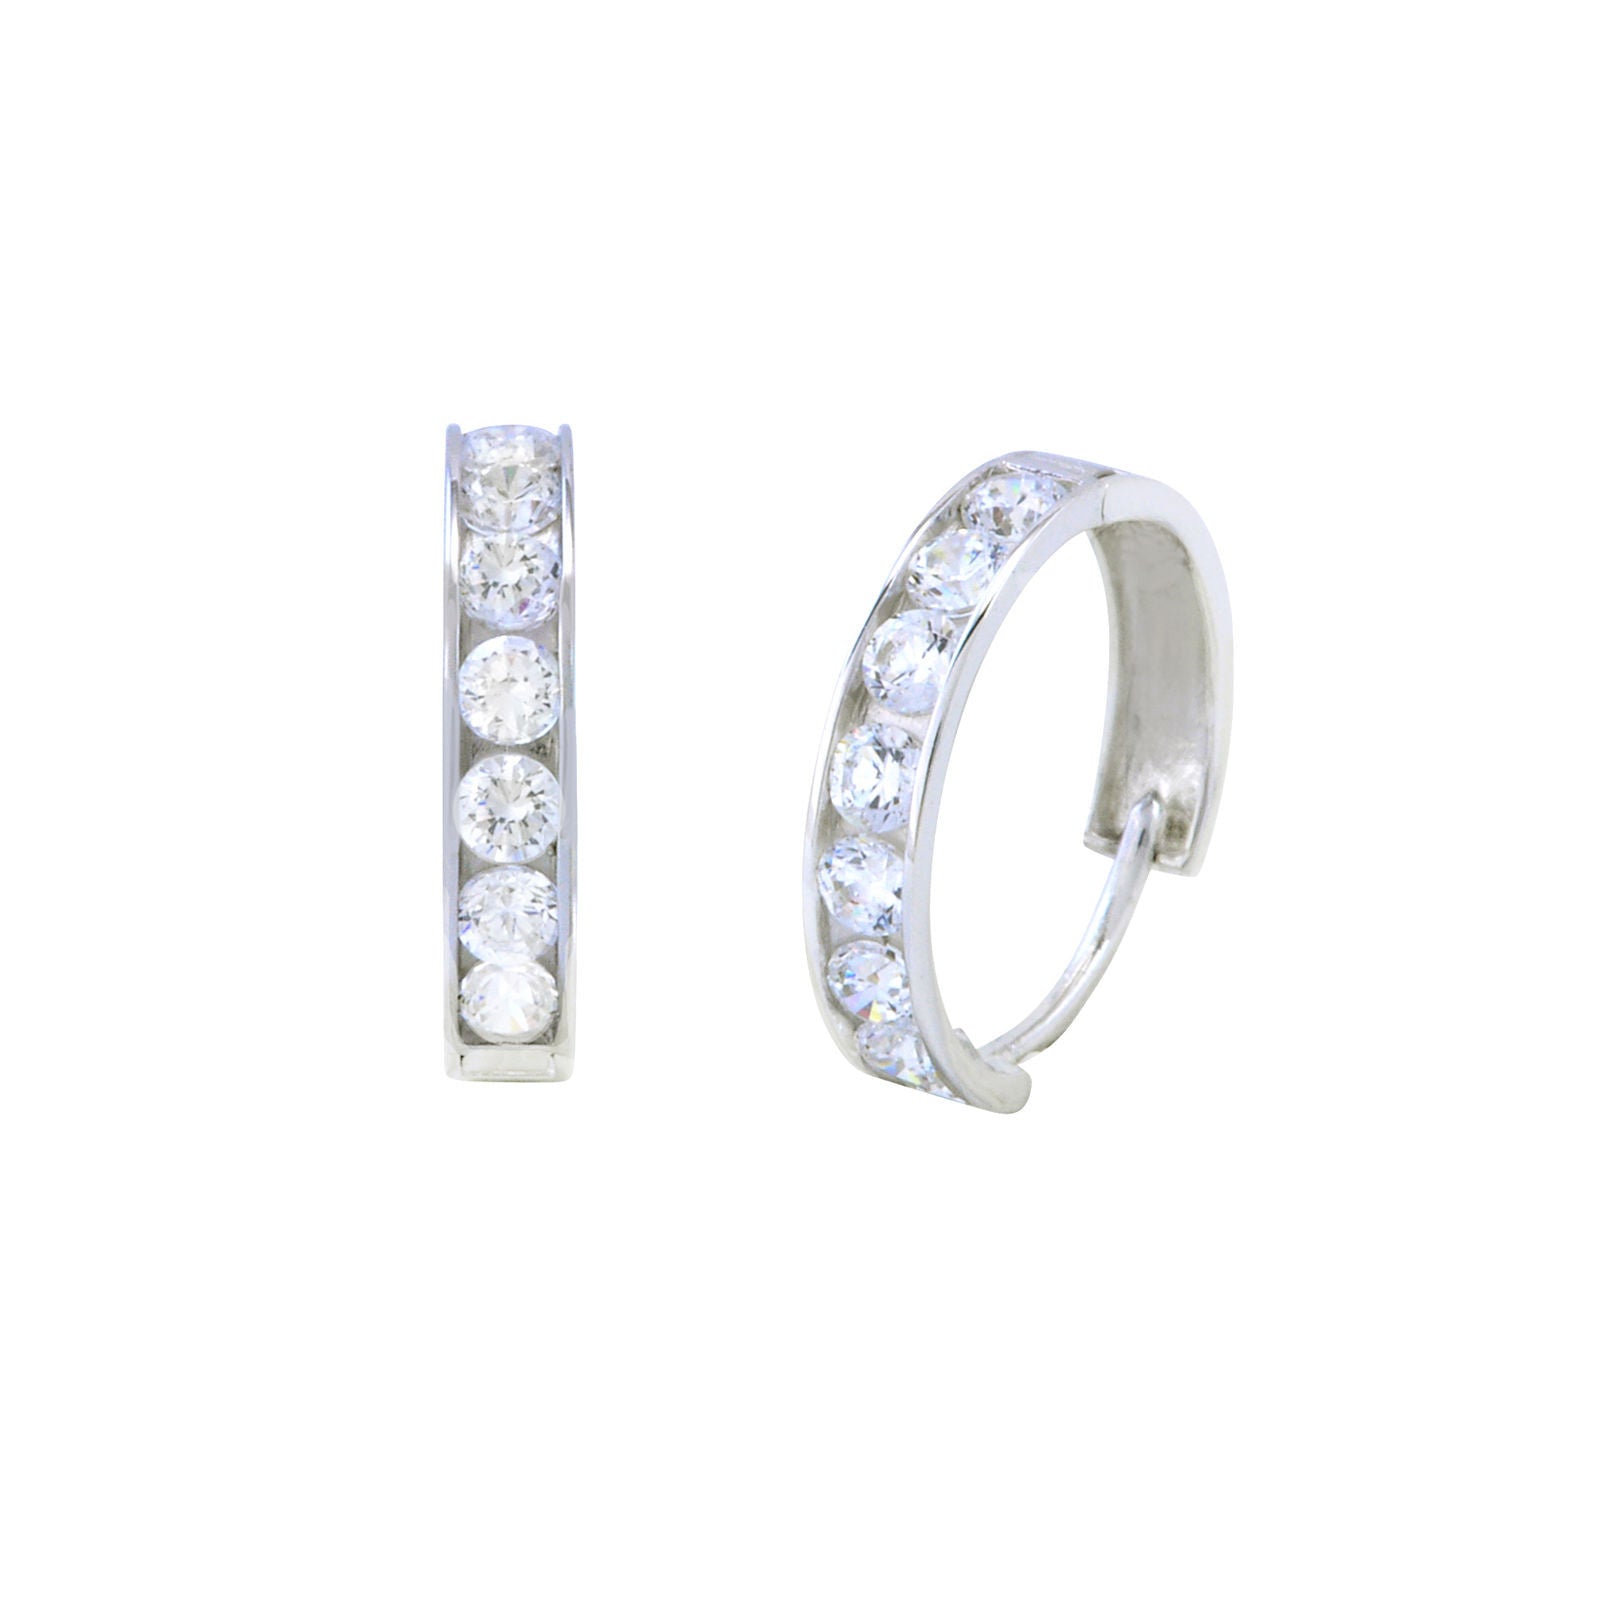 14K White Gold 14mm Double-Row Cubic Zirconia Huggie Hoop Earrings 